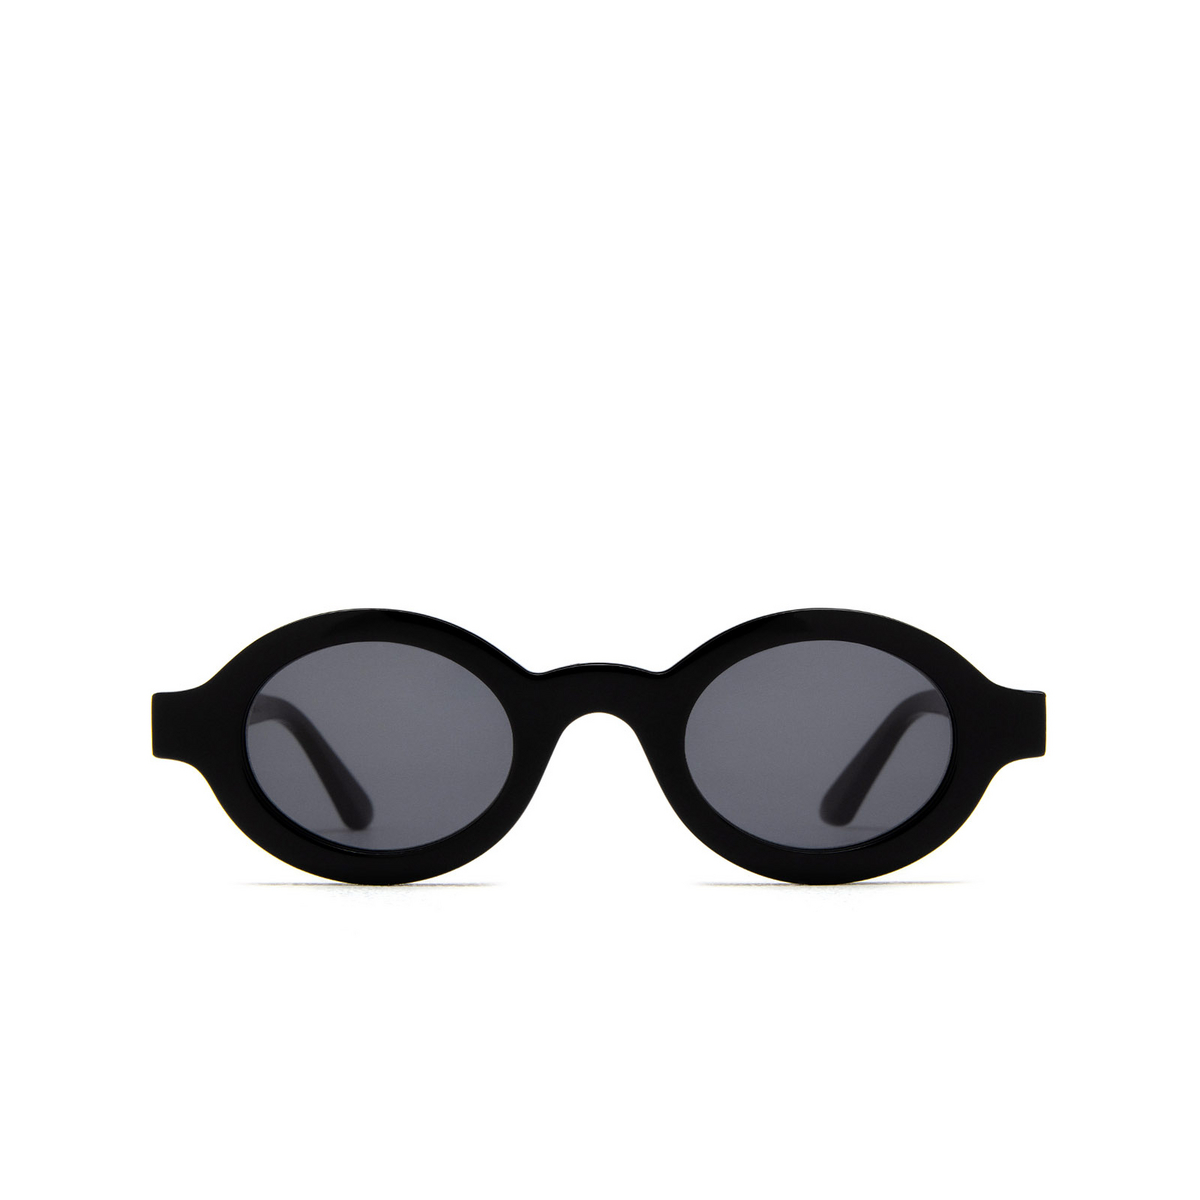 Huma ZOE Sunglasses 06 Black - front view